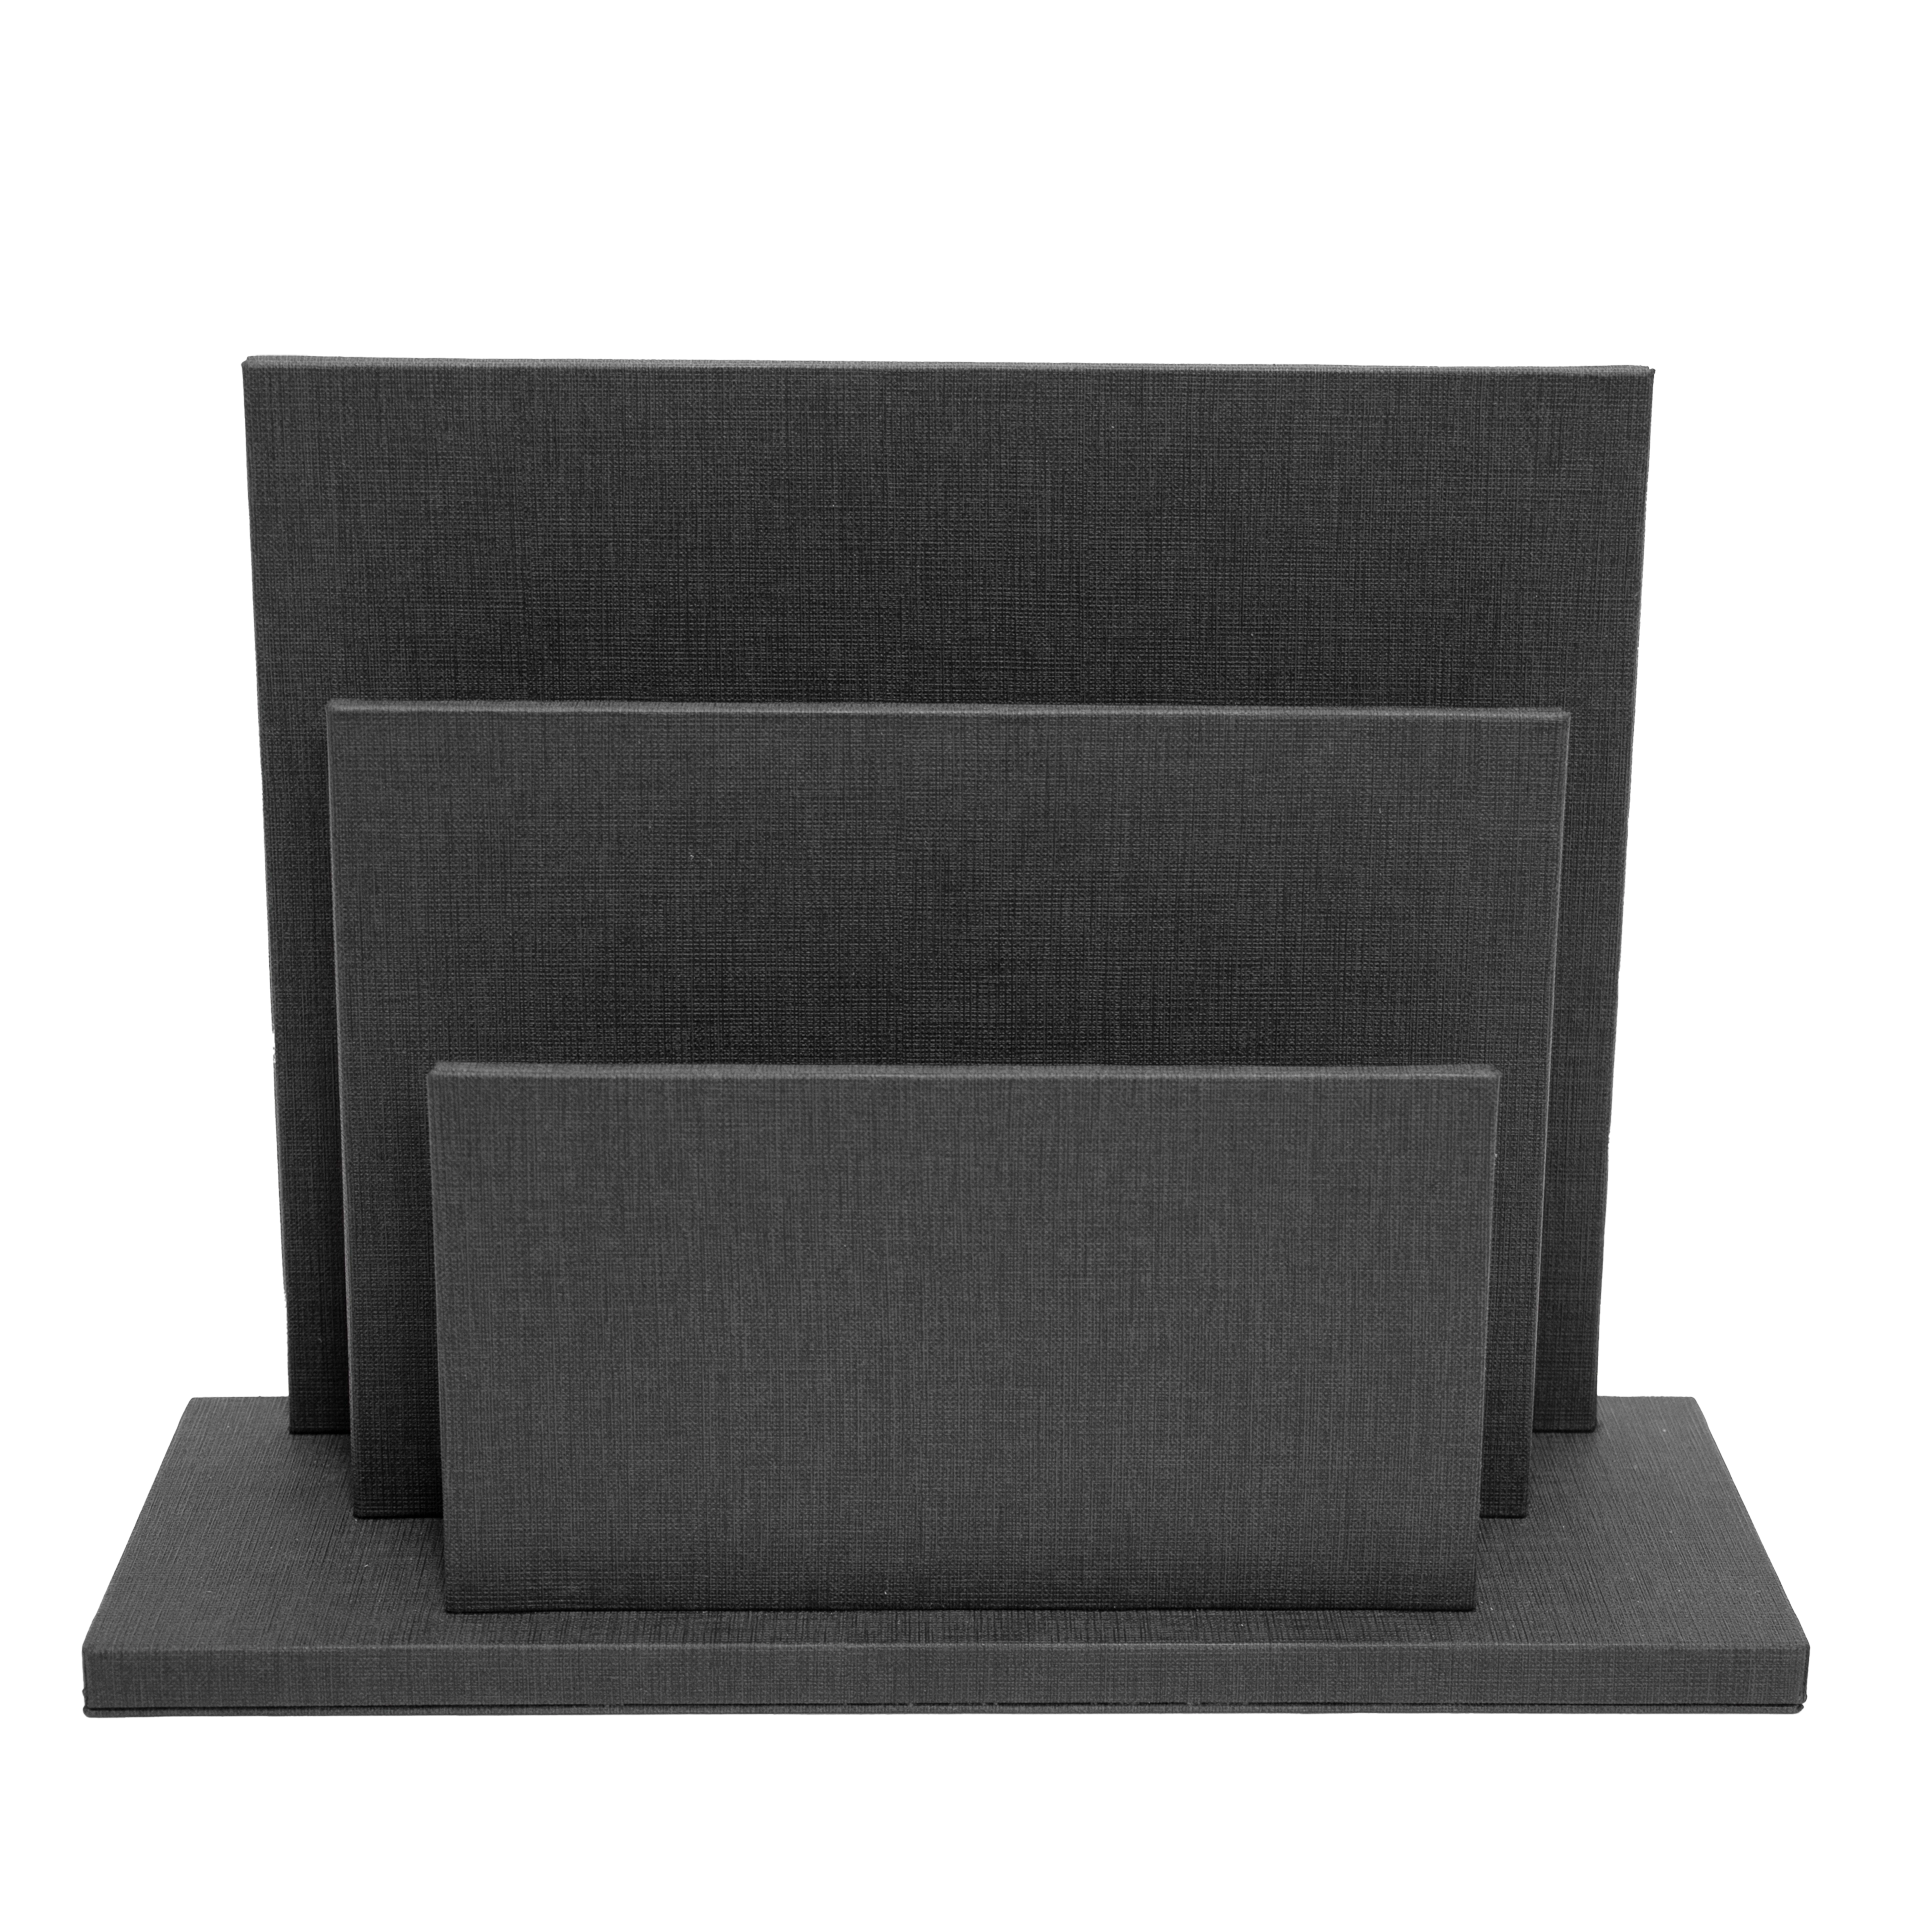 Prospektehalter | La Carte Holz | Ecoleder 2 FarbenYUT braun oder creme 33x12x h 24,5 cm